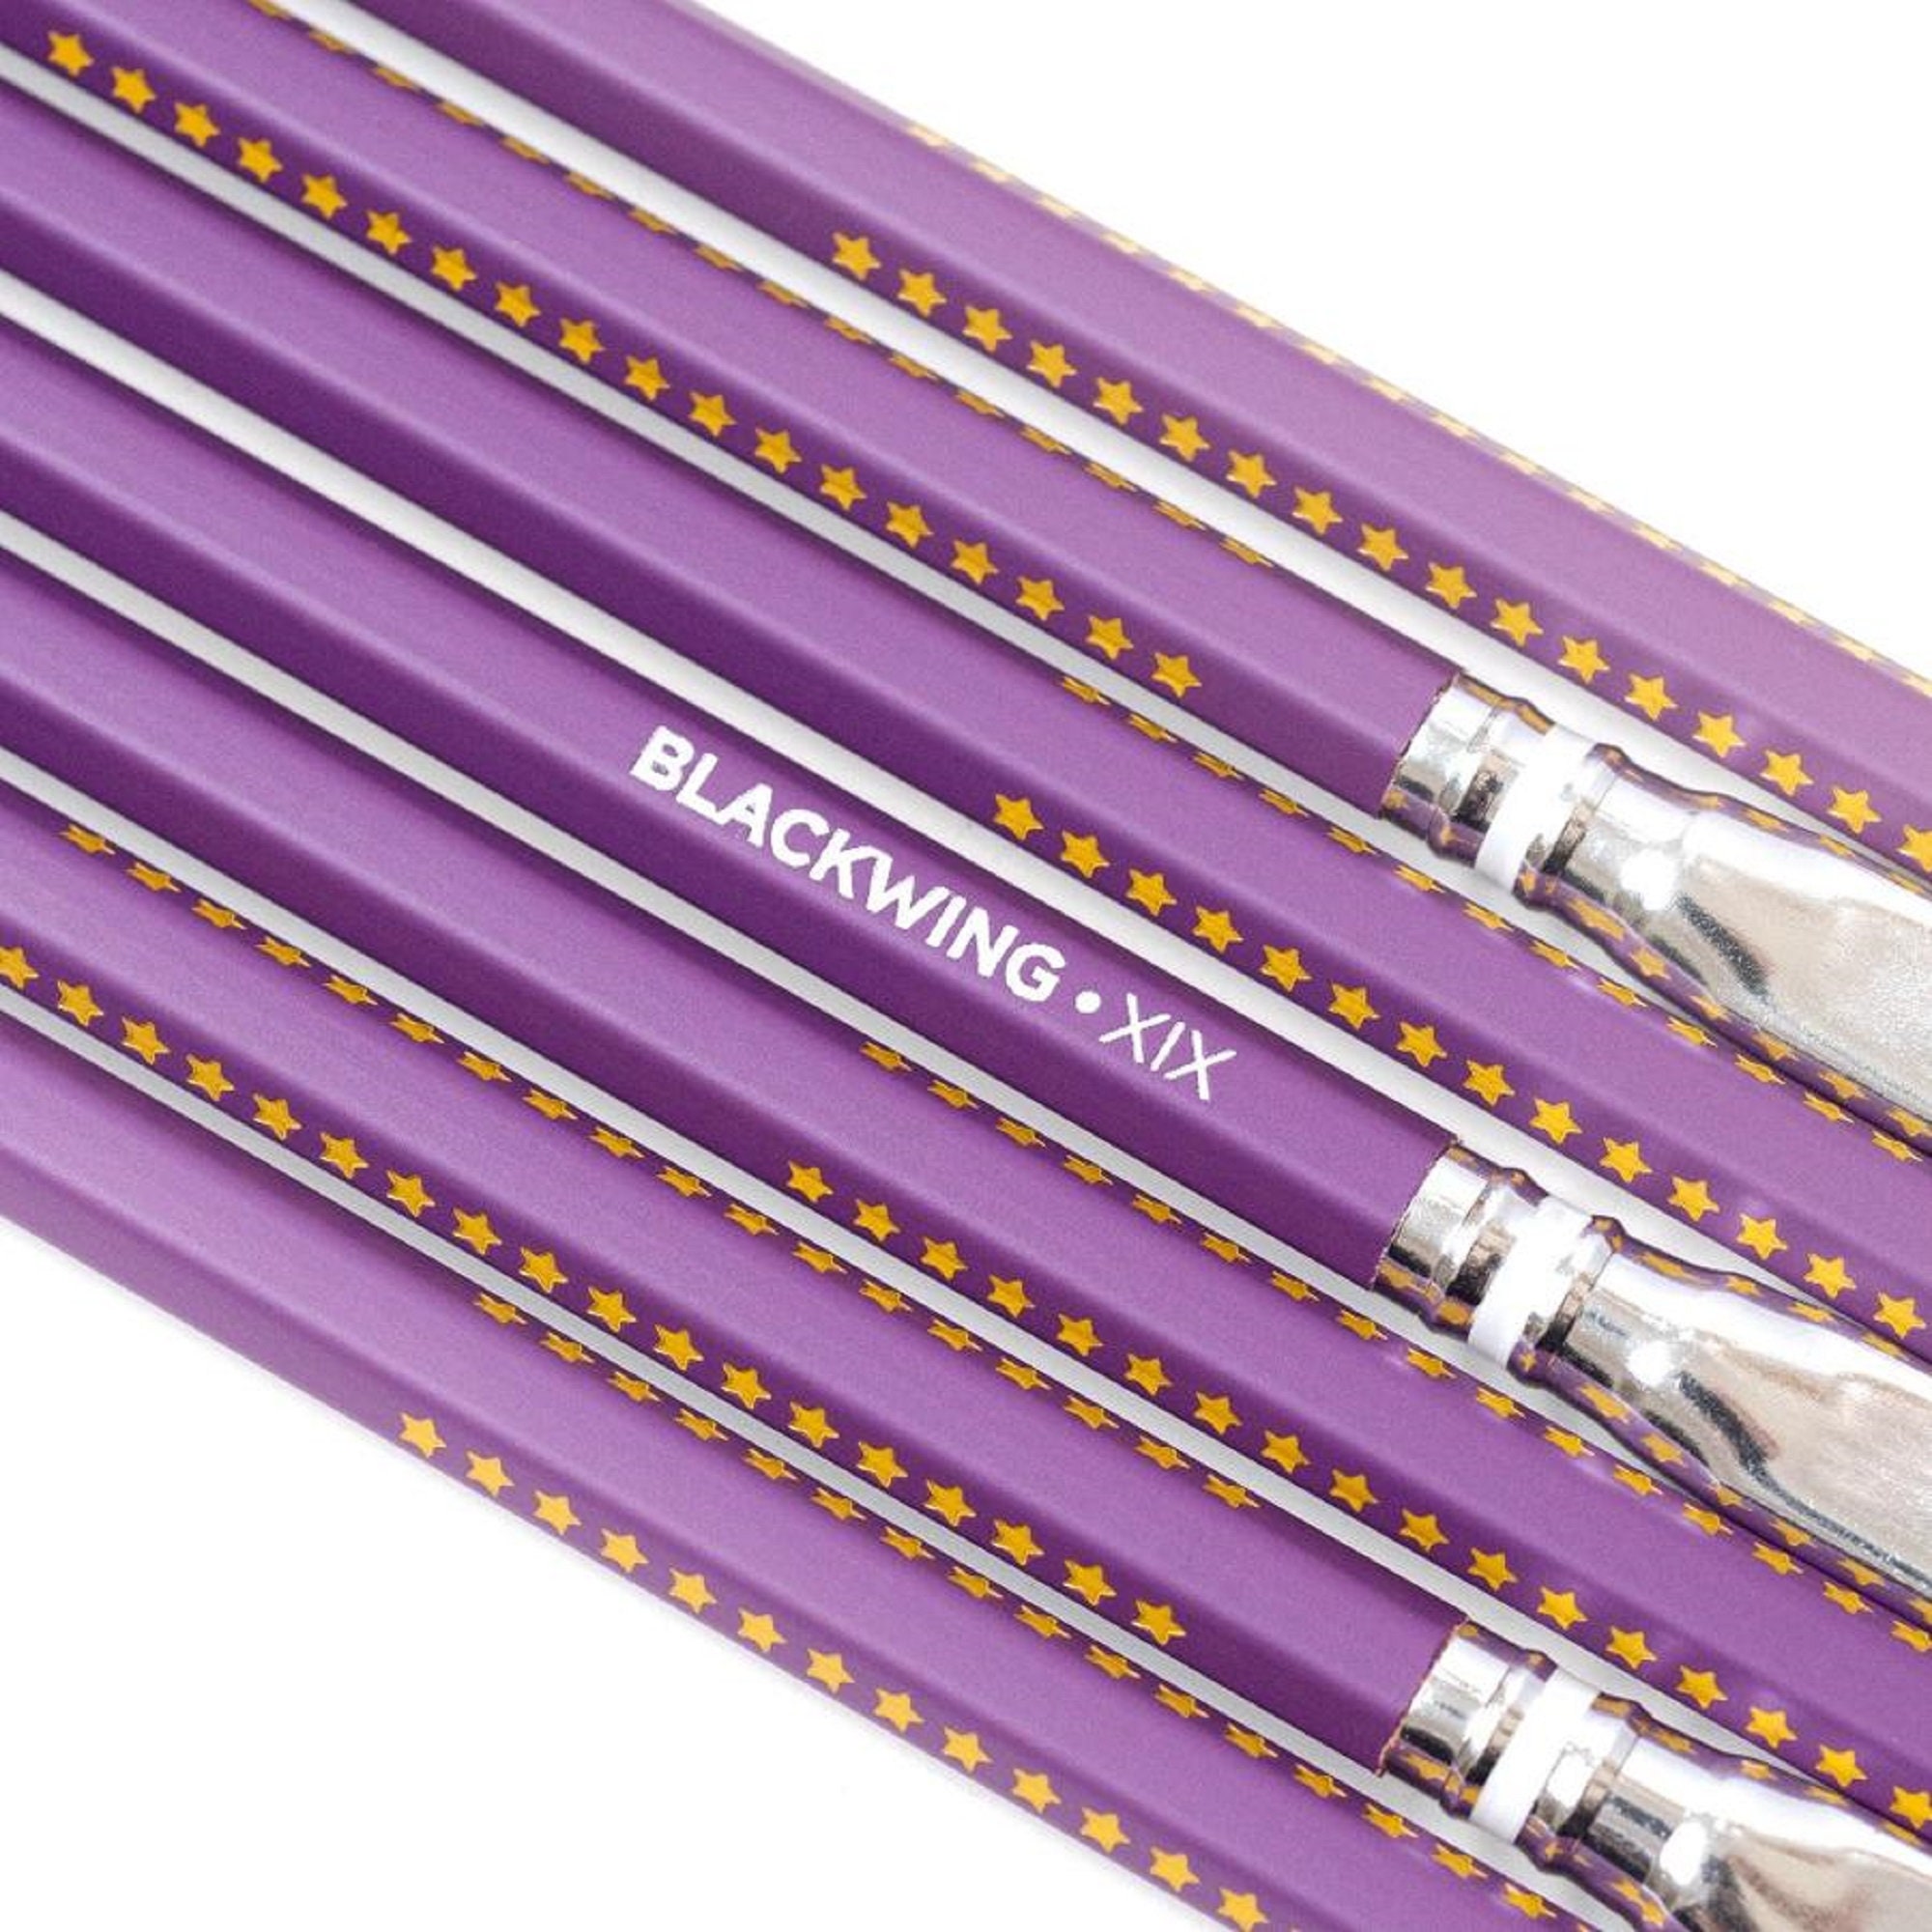 Palomino Blackwing Pencil Matte Black Finish Soft Graphite Pencil 